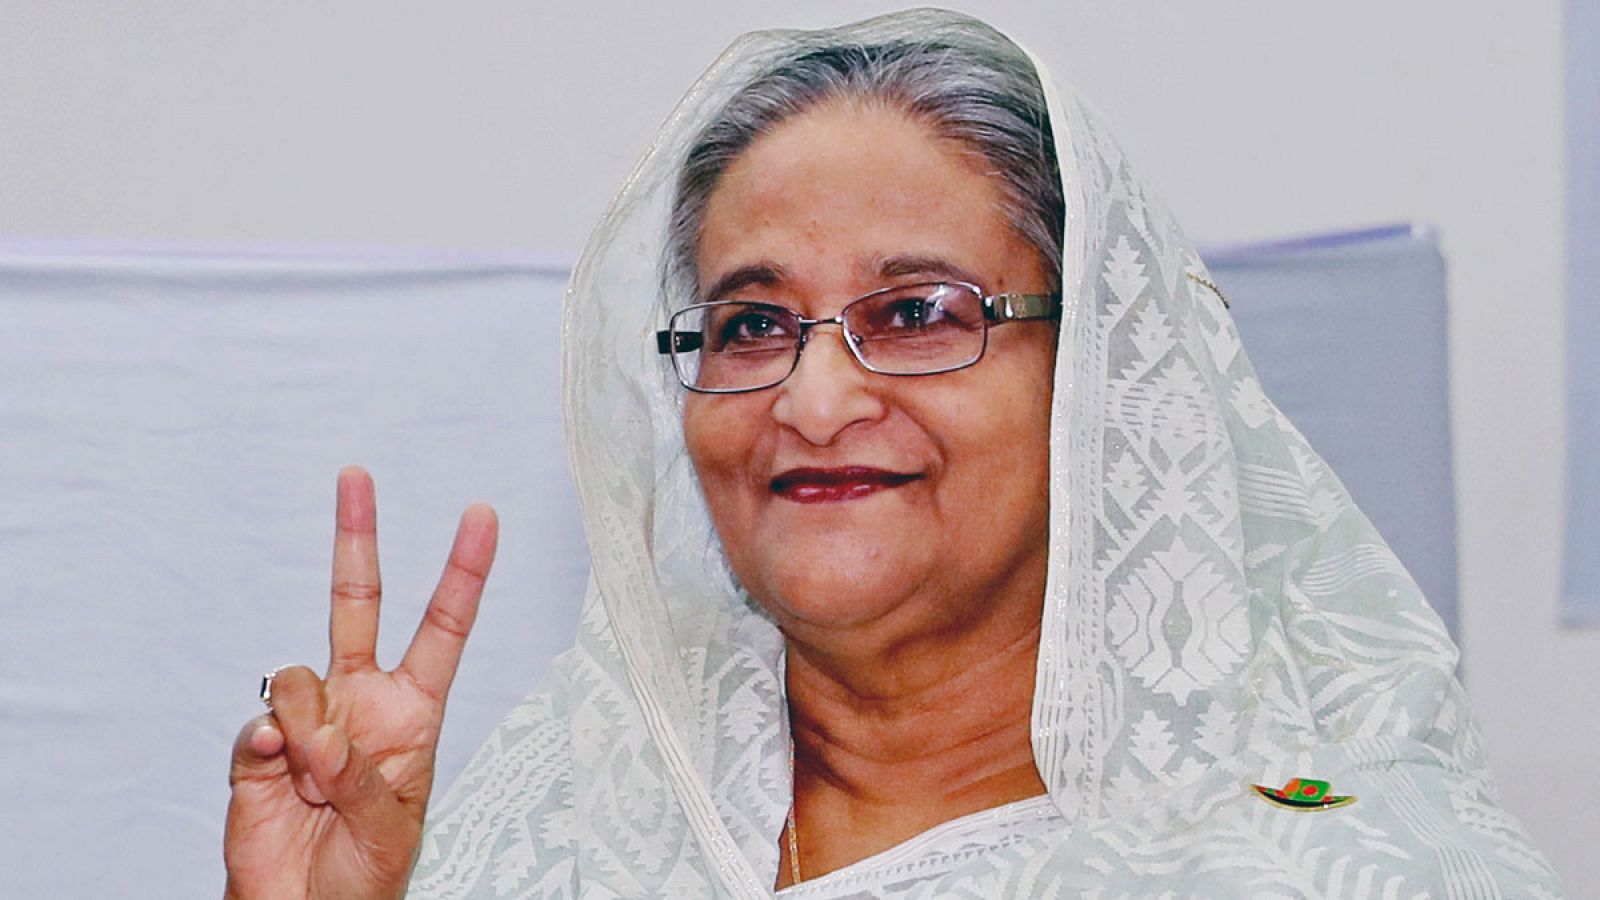 La primera ministra de Bangladesh, Sheikh Hasina, realiza el símbolo de la victoria después de votar en Dhaka, Bangladesh.